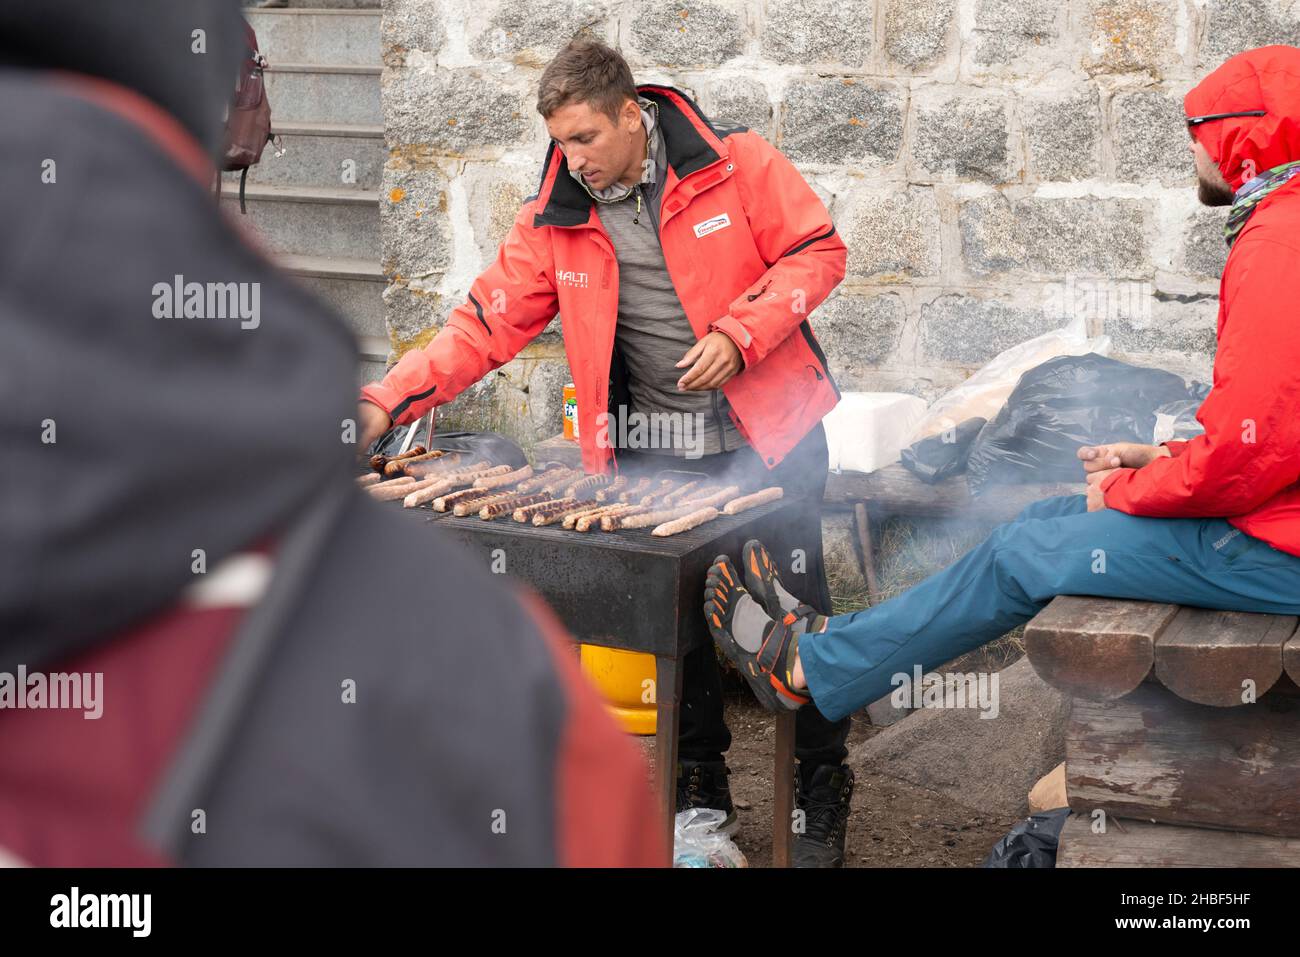 Man at a barbeque grill preparing alfresco food outside the Black Peak Hut at 2290m in Vitosha Mountain, Sofia, Bulgaria Stock Photo